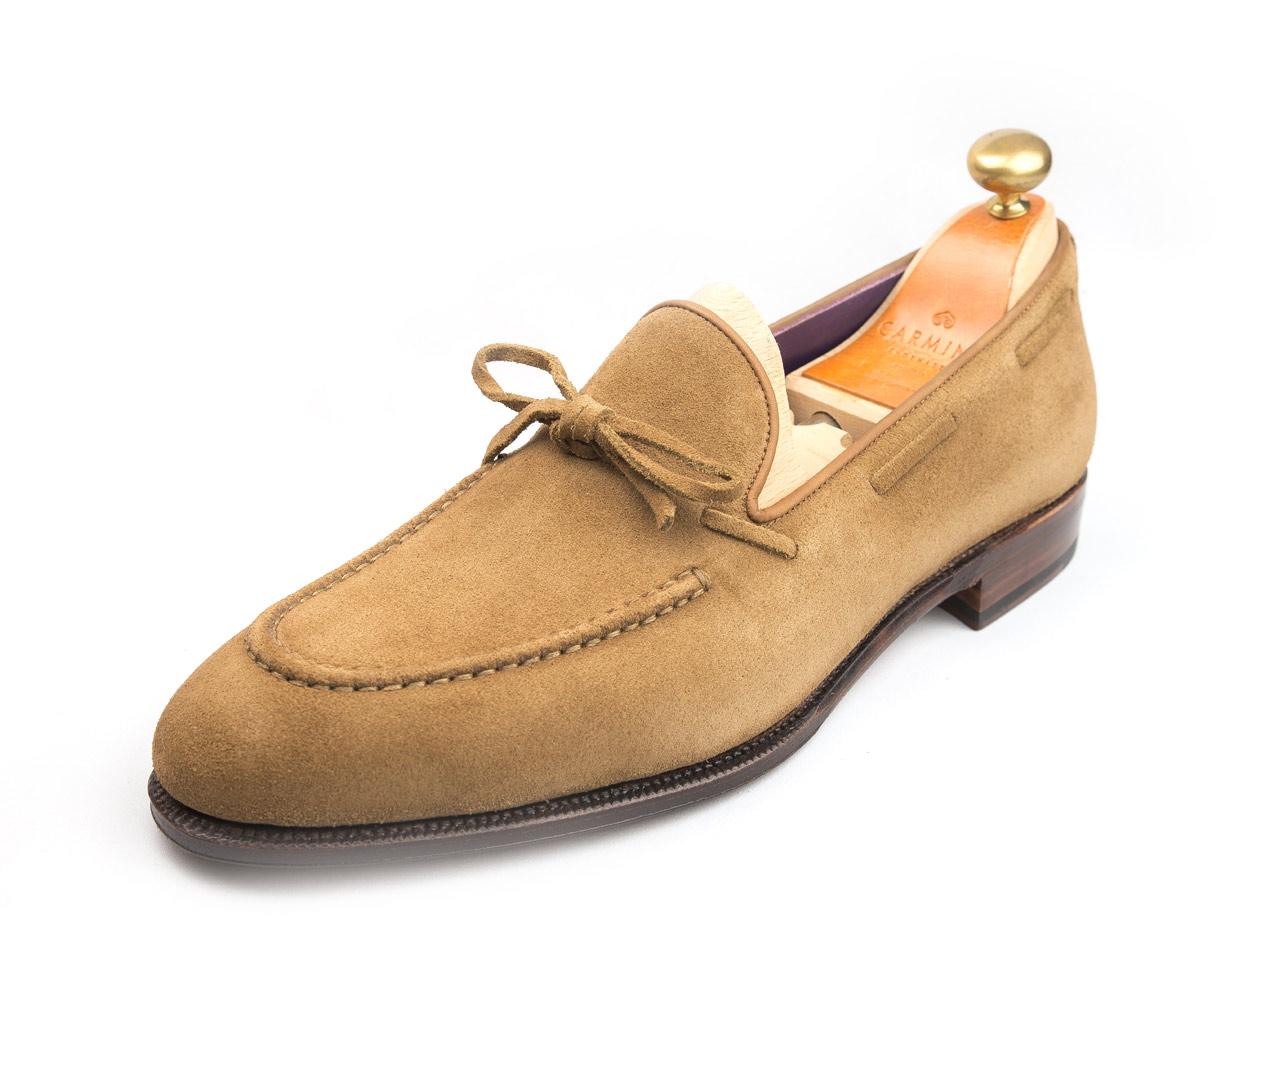 Merchandising Fejlfri Hummingbird Carmina Shoemaker on Twitter: "Carmina 80228 Uetam last in taupe suede # shoes #carmina #loafer #Suede http://t.co/MnZYPhHZVJ" / Twitter